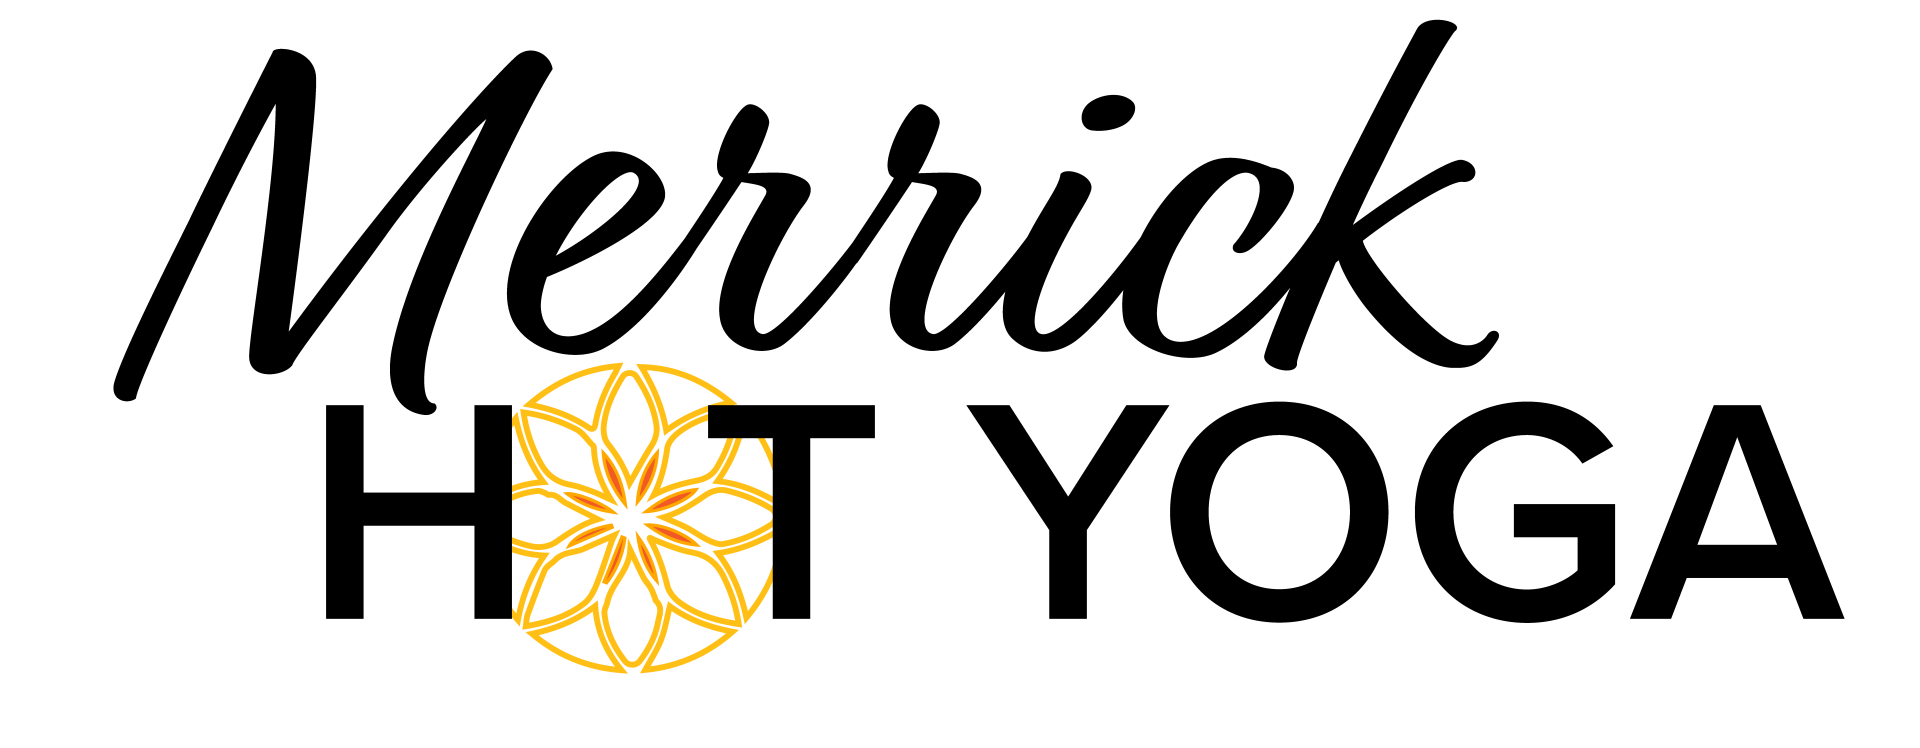 merrick hot yoga logo